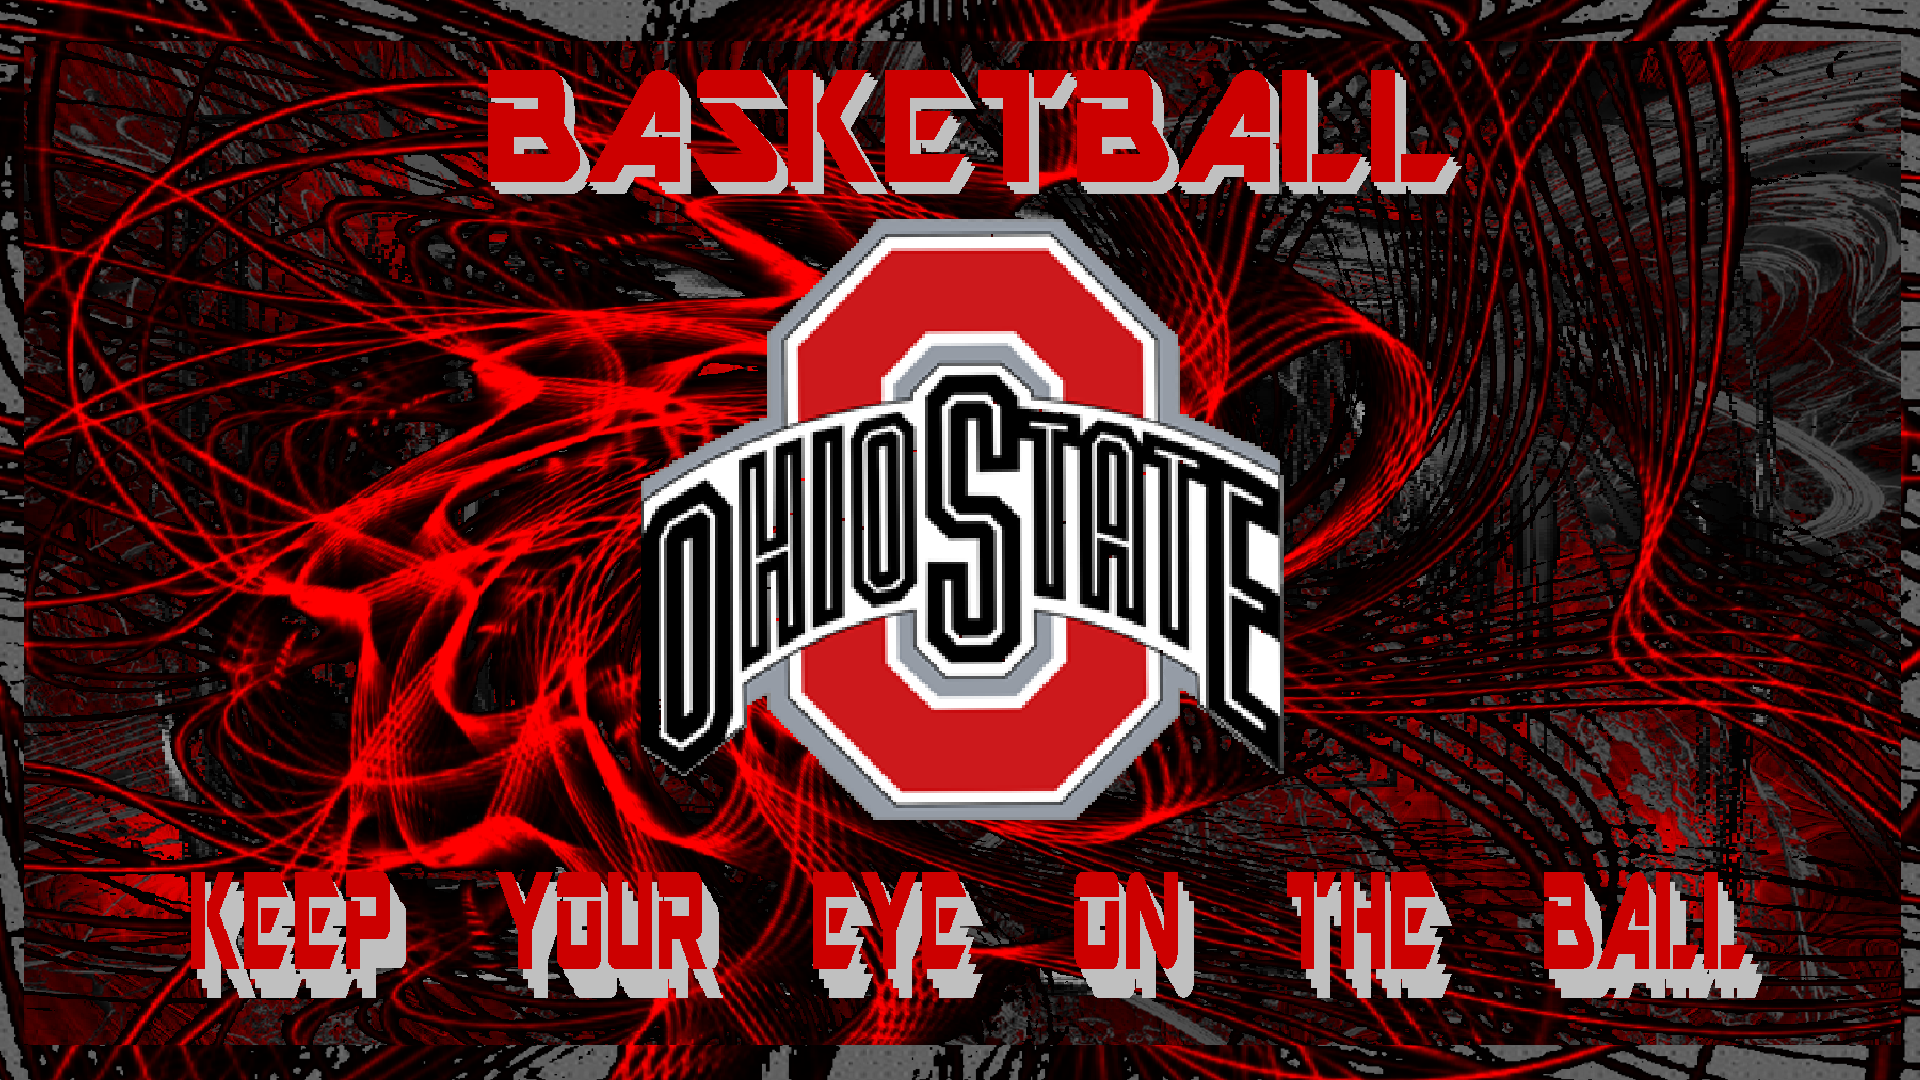 Ohio State University Basketball Image Keep Your Eye On